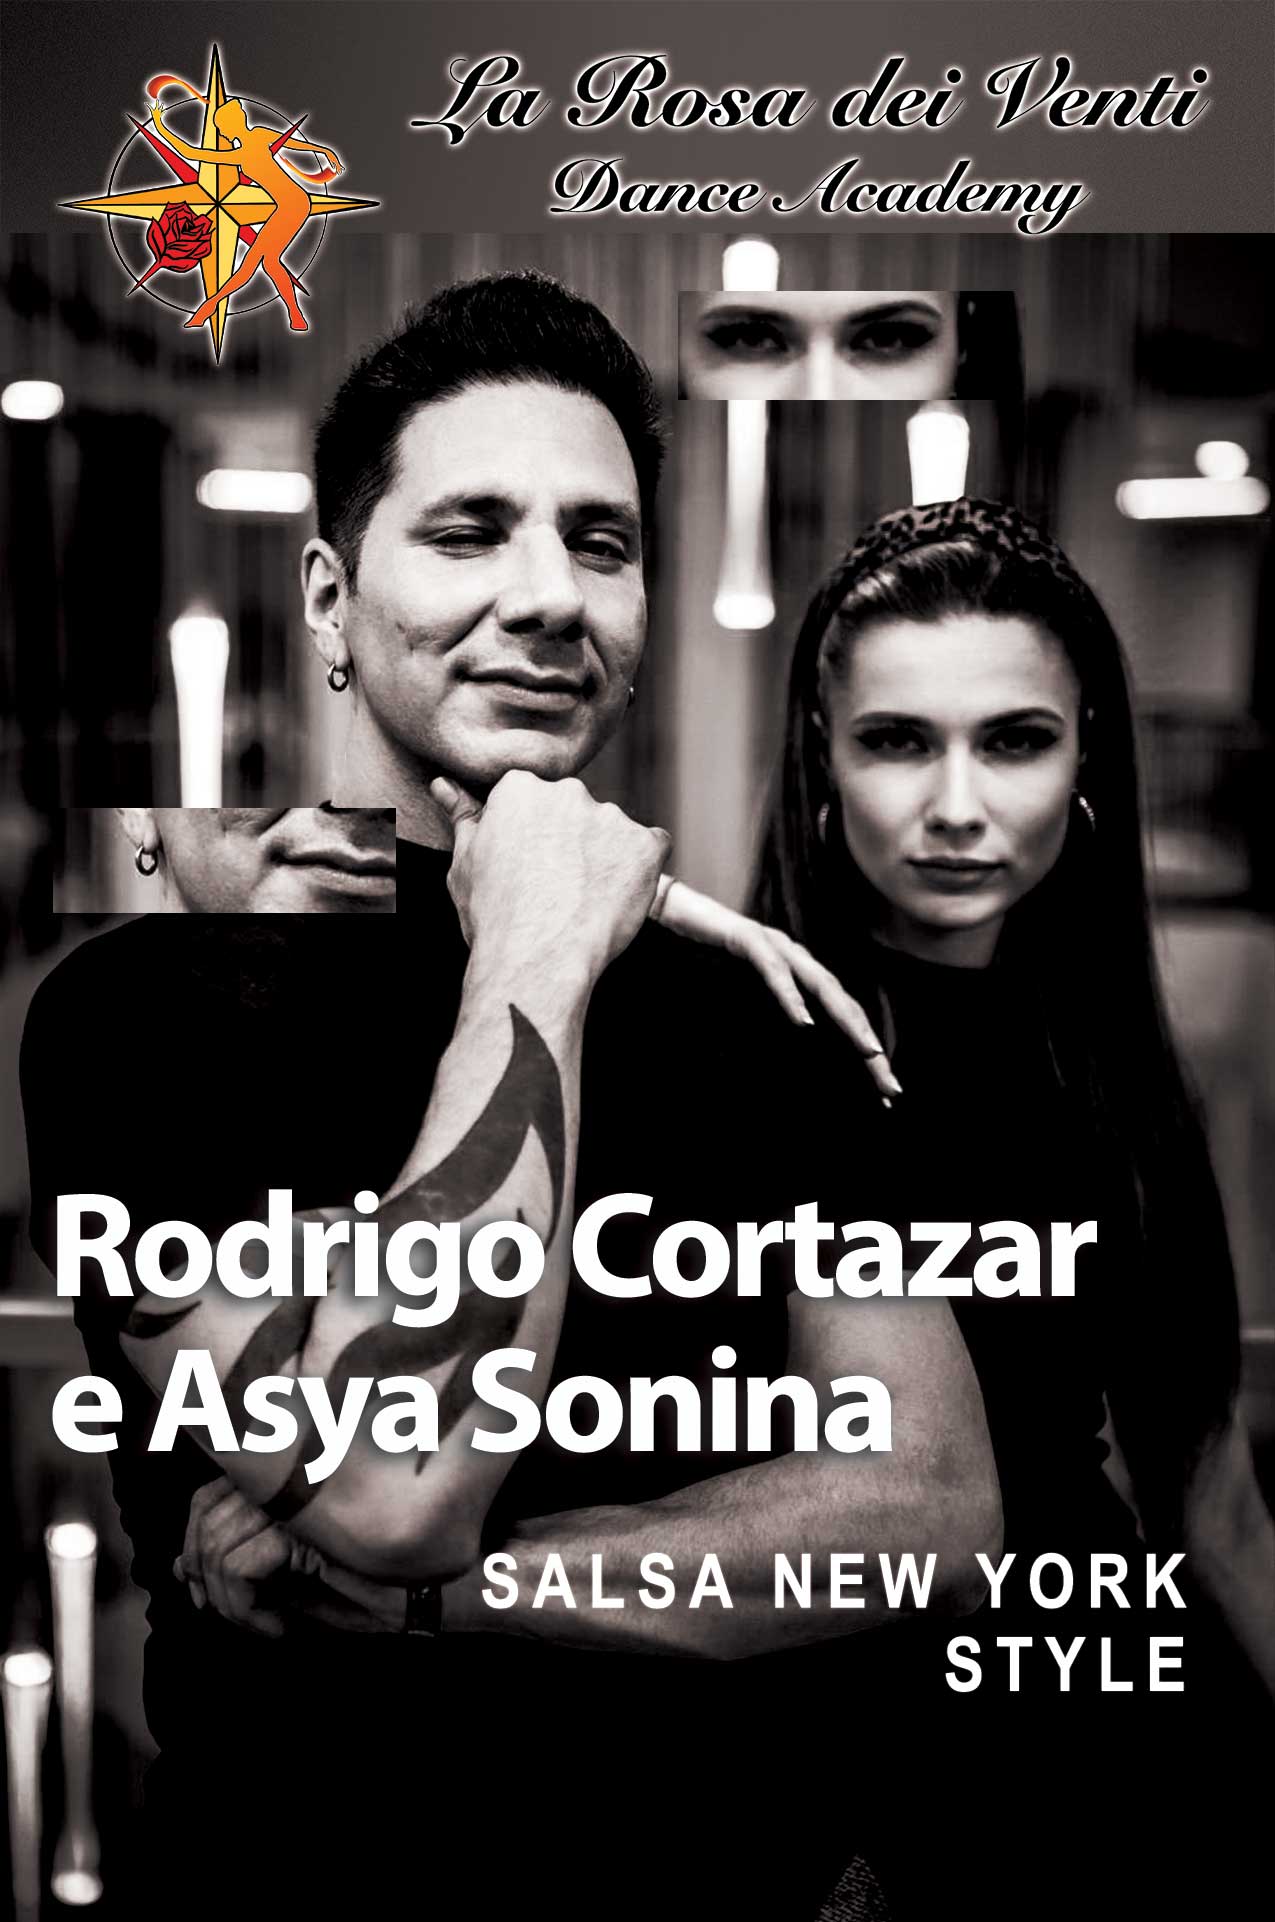 Rodrigo Cortazar & Asya Sonina Salsa New York Style La Rosa dei Venti Dance Accademy